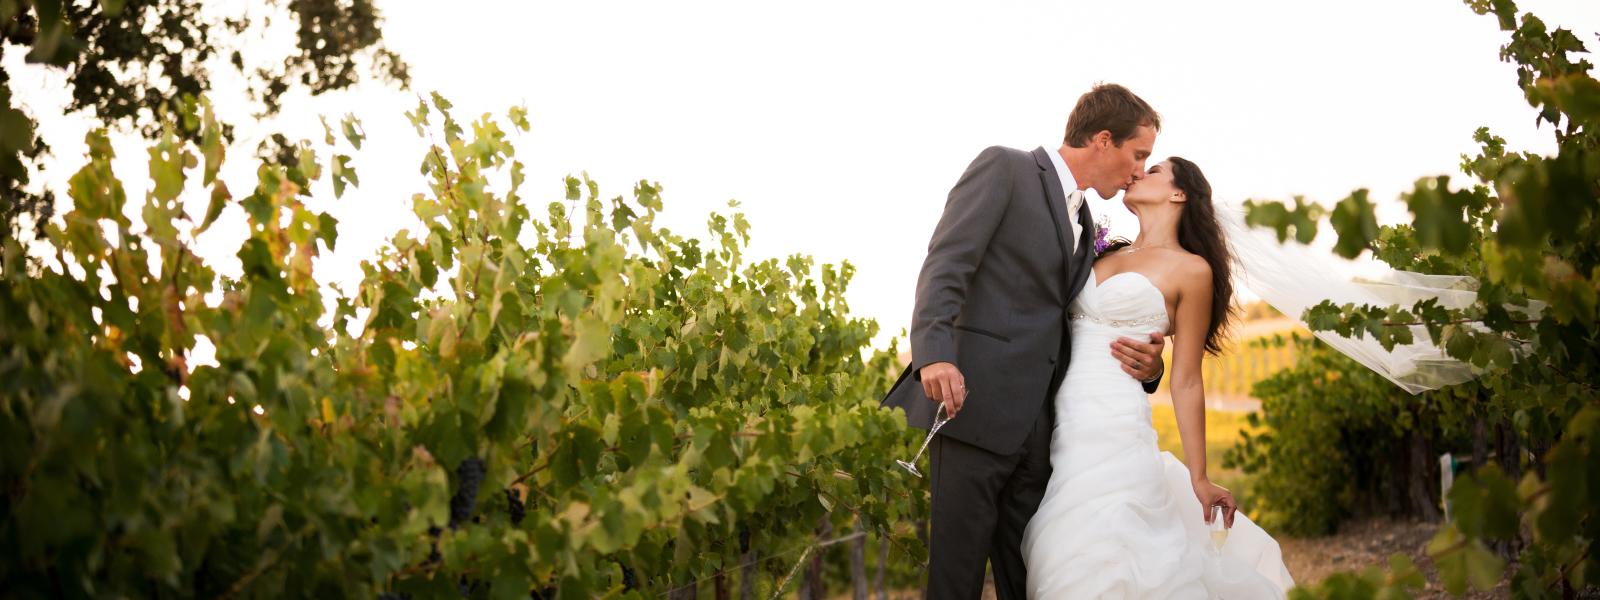 San Luis Obispo County Weddings Venues Licenses More